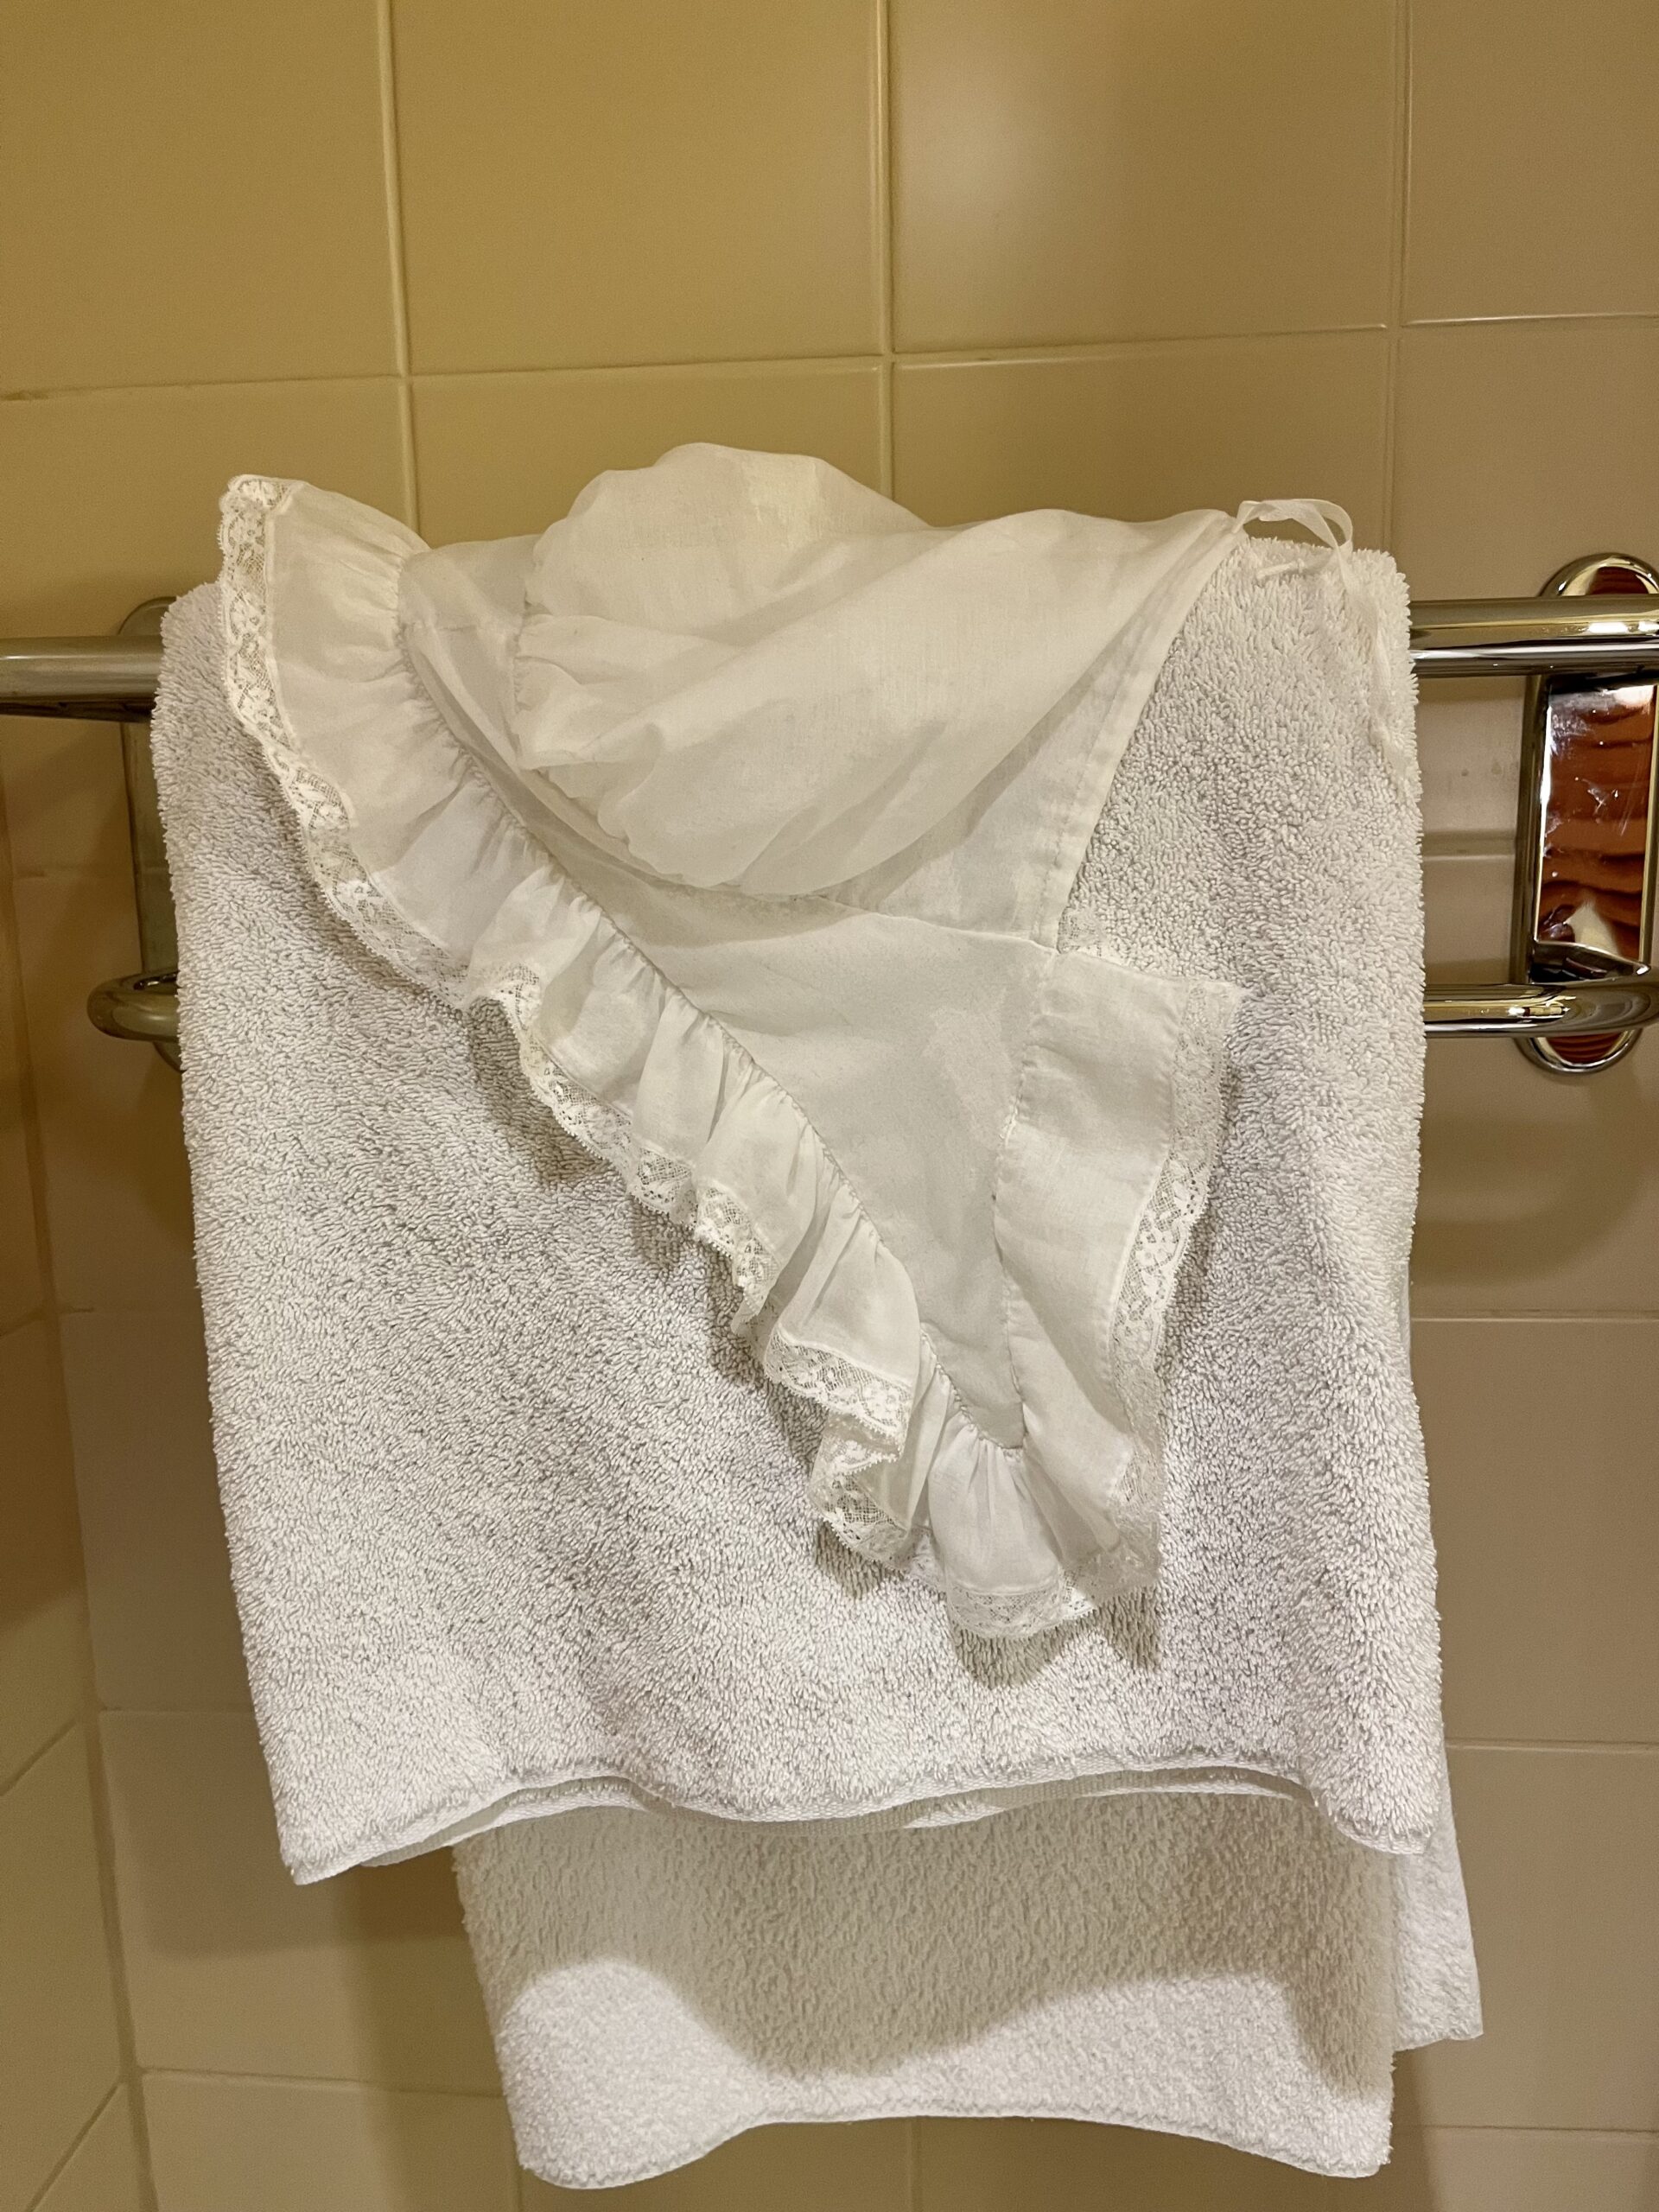 A lace-edged lappet cap hangs over a towel trail i a bathroom.